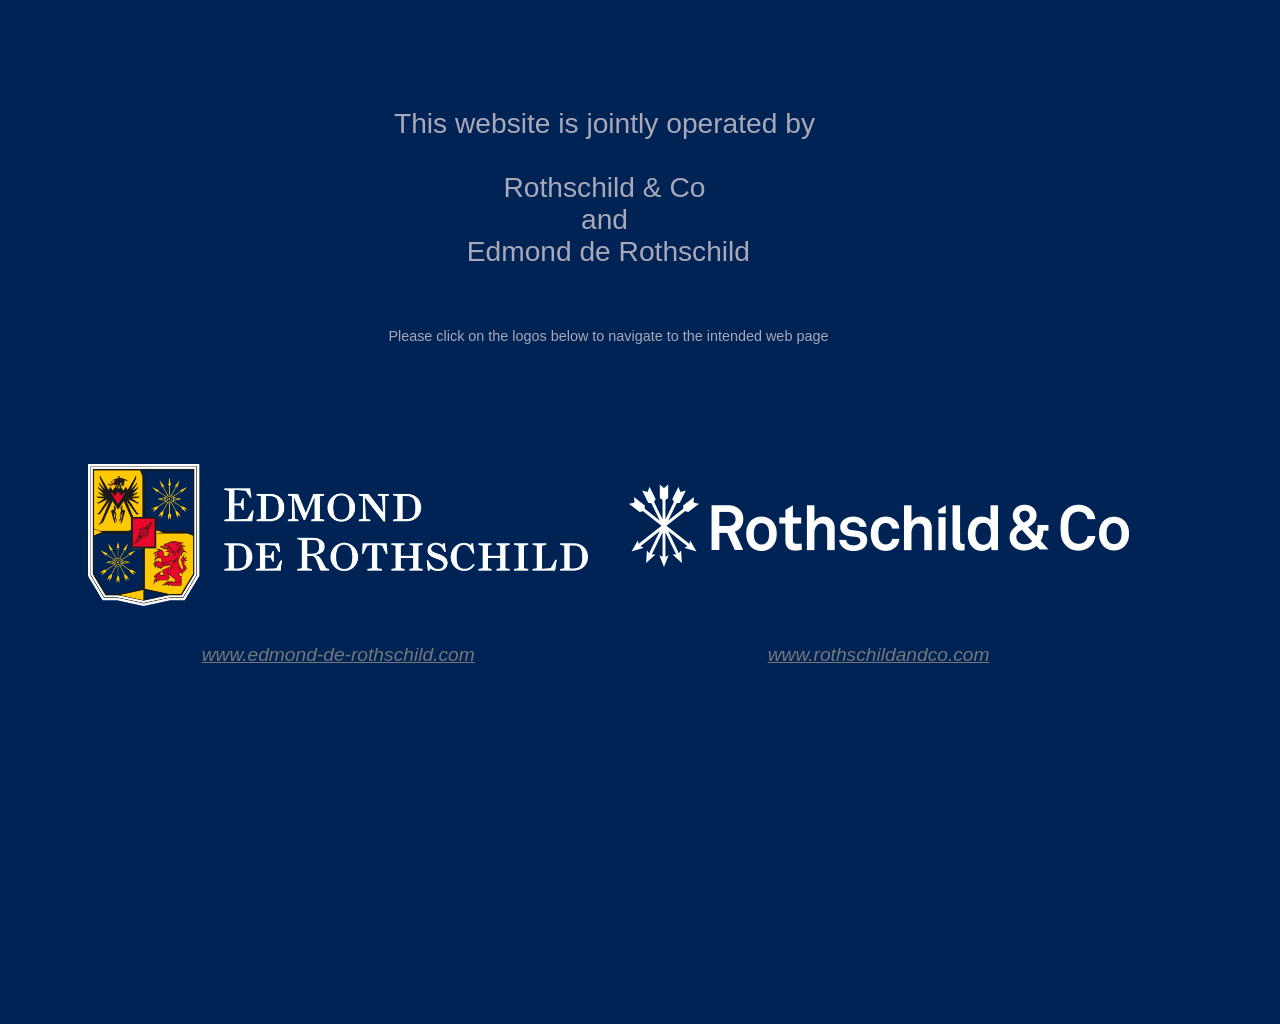 www.rothschild.com